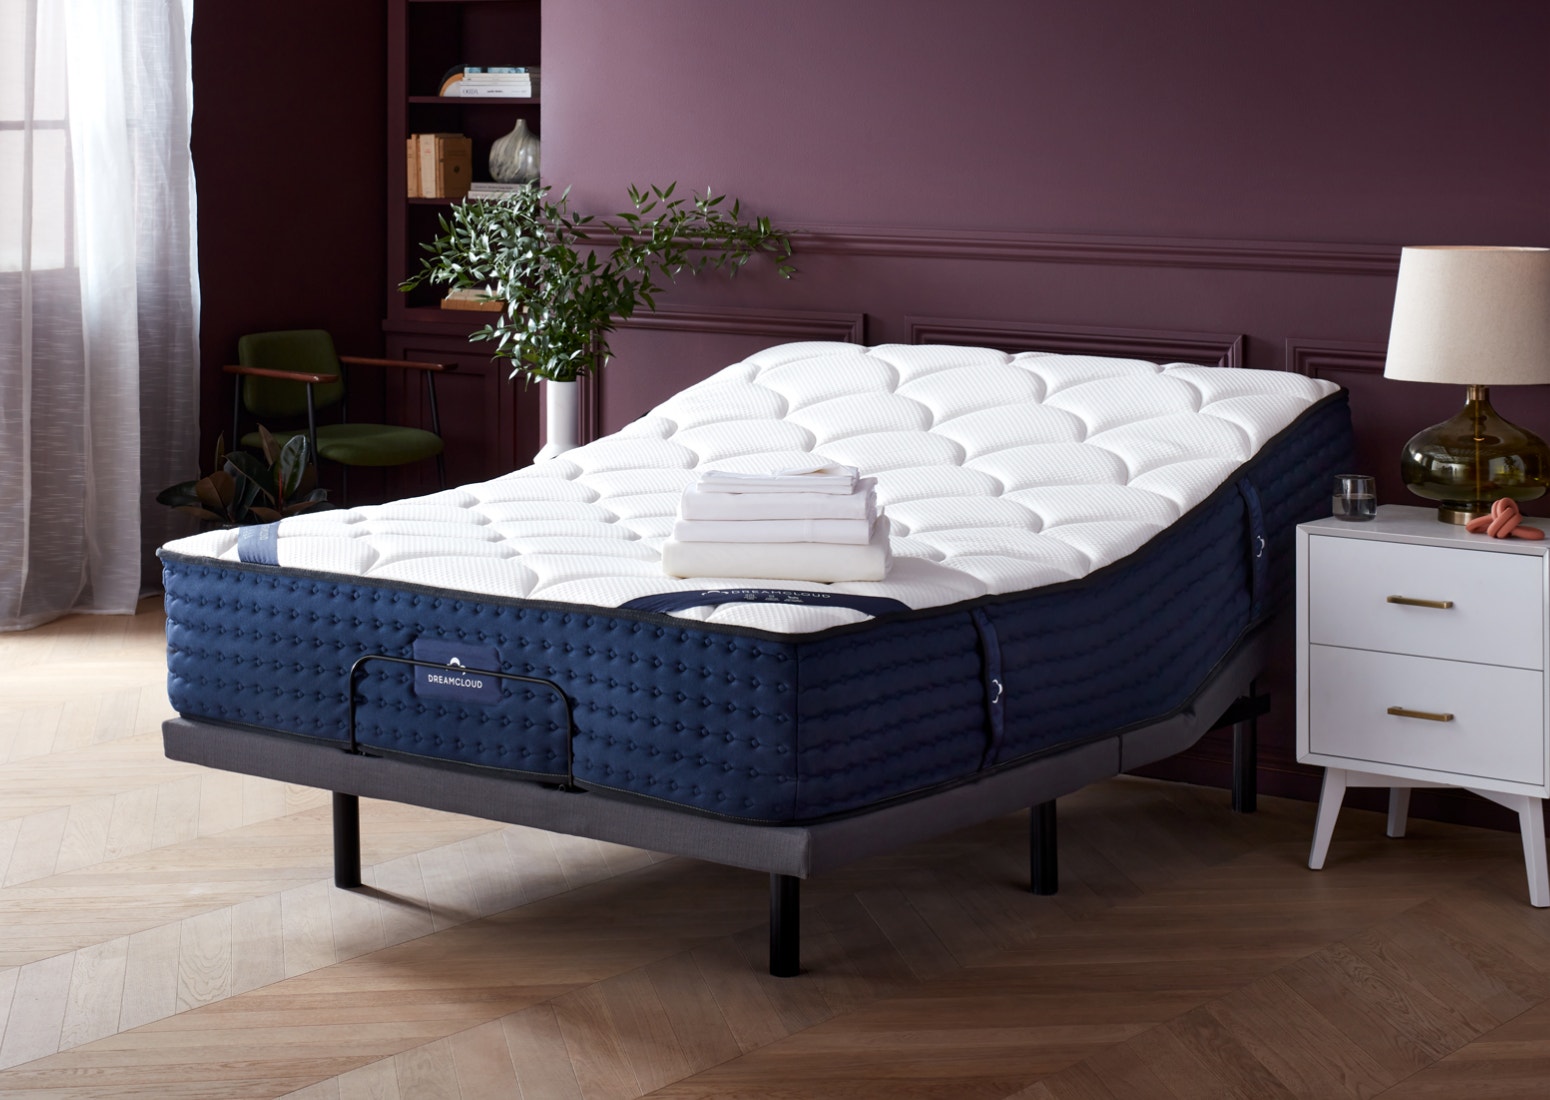 Queen Size Adjustable Bed Frames, Queen King Bed Frame Adjustable